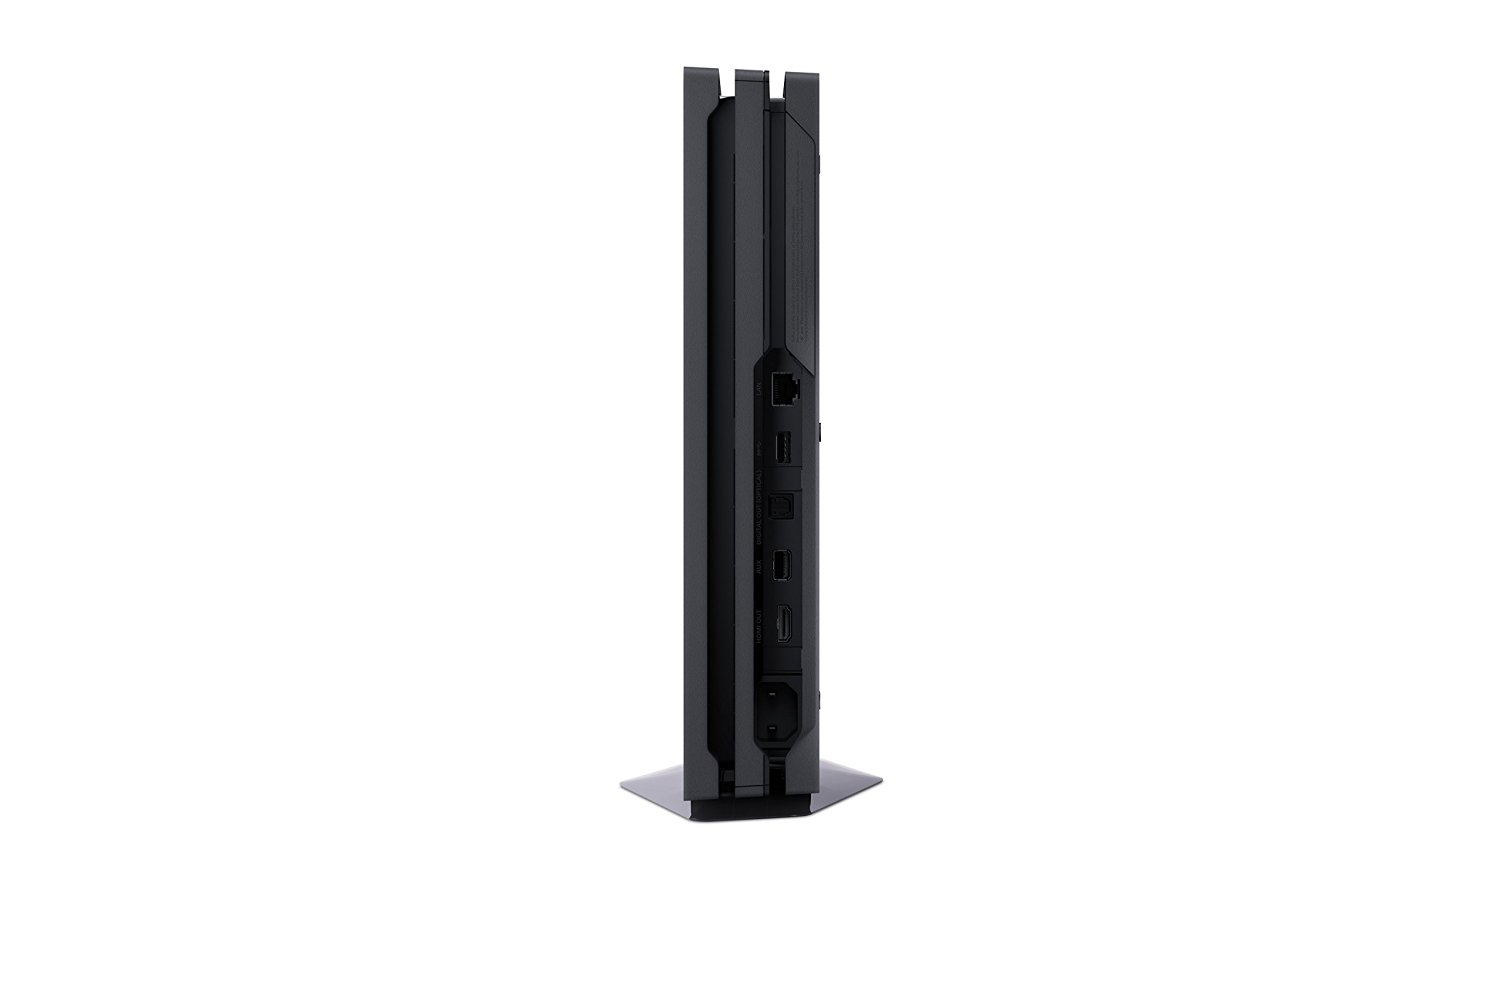 PlayStation 4 Pro CUH-7100 Series 1TB HDD (Jet Black) - Bitcoin